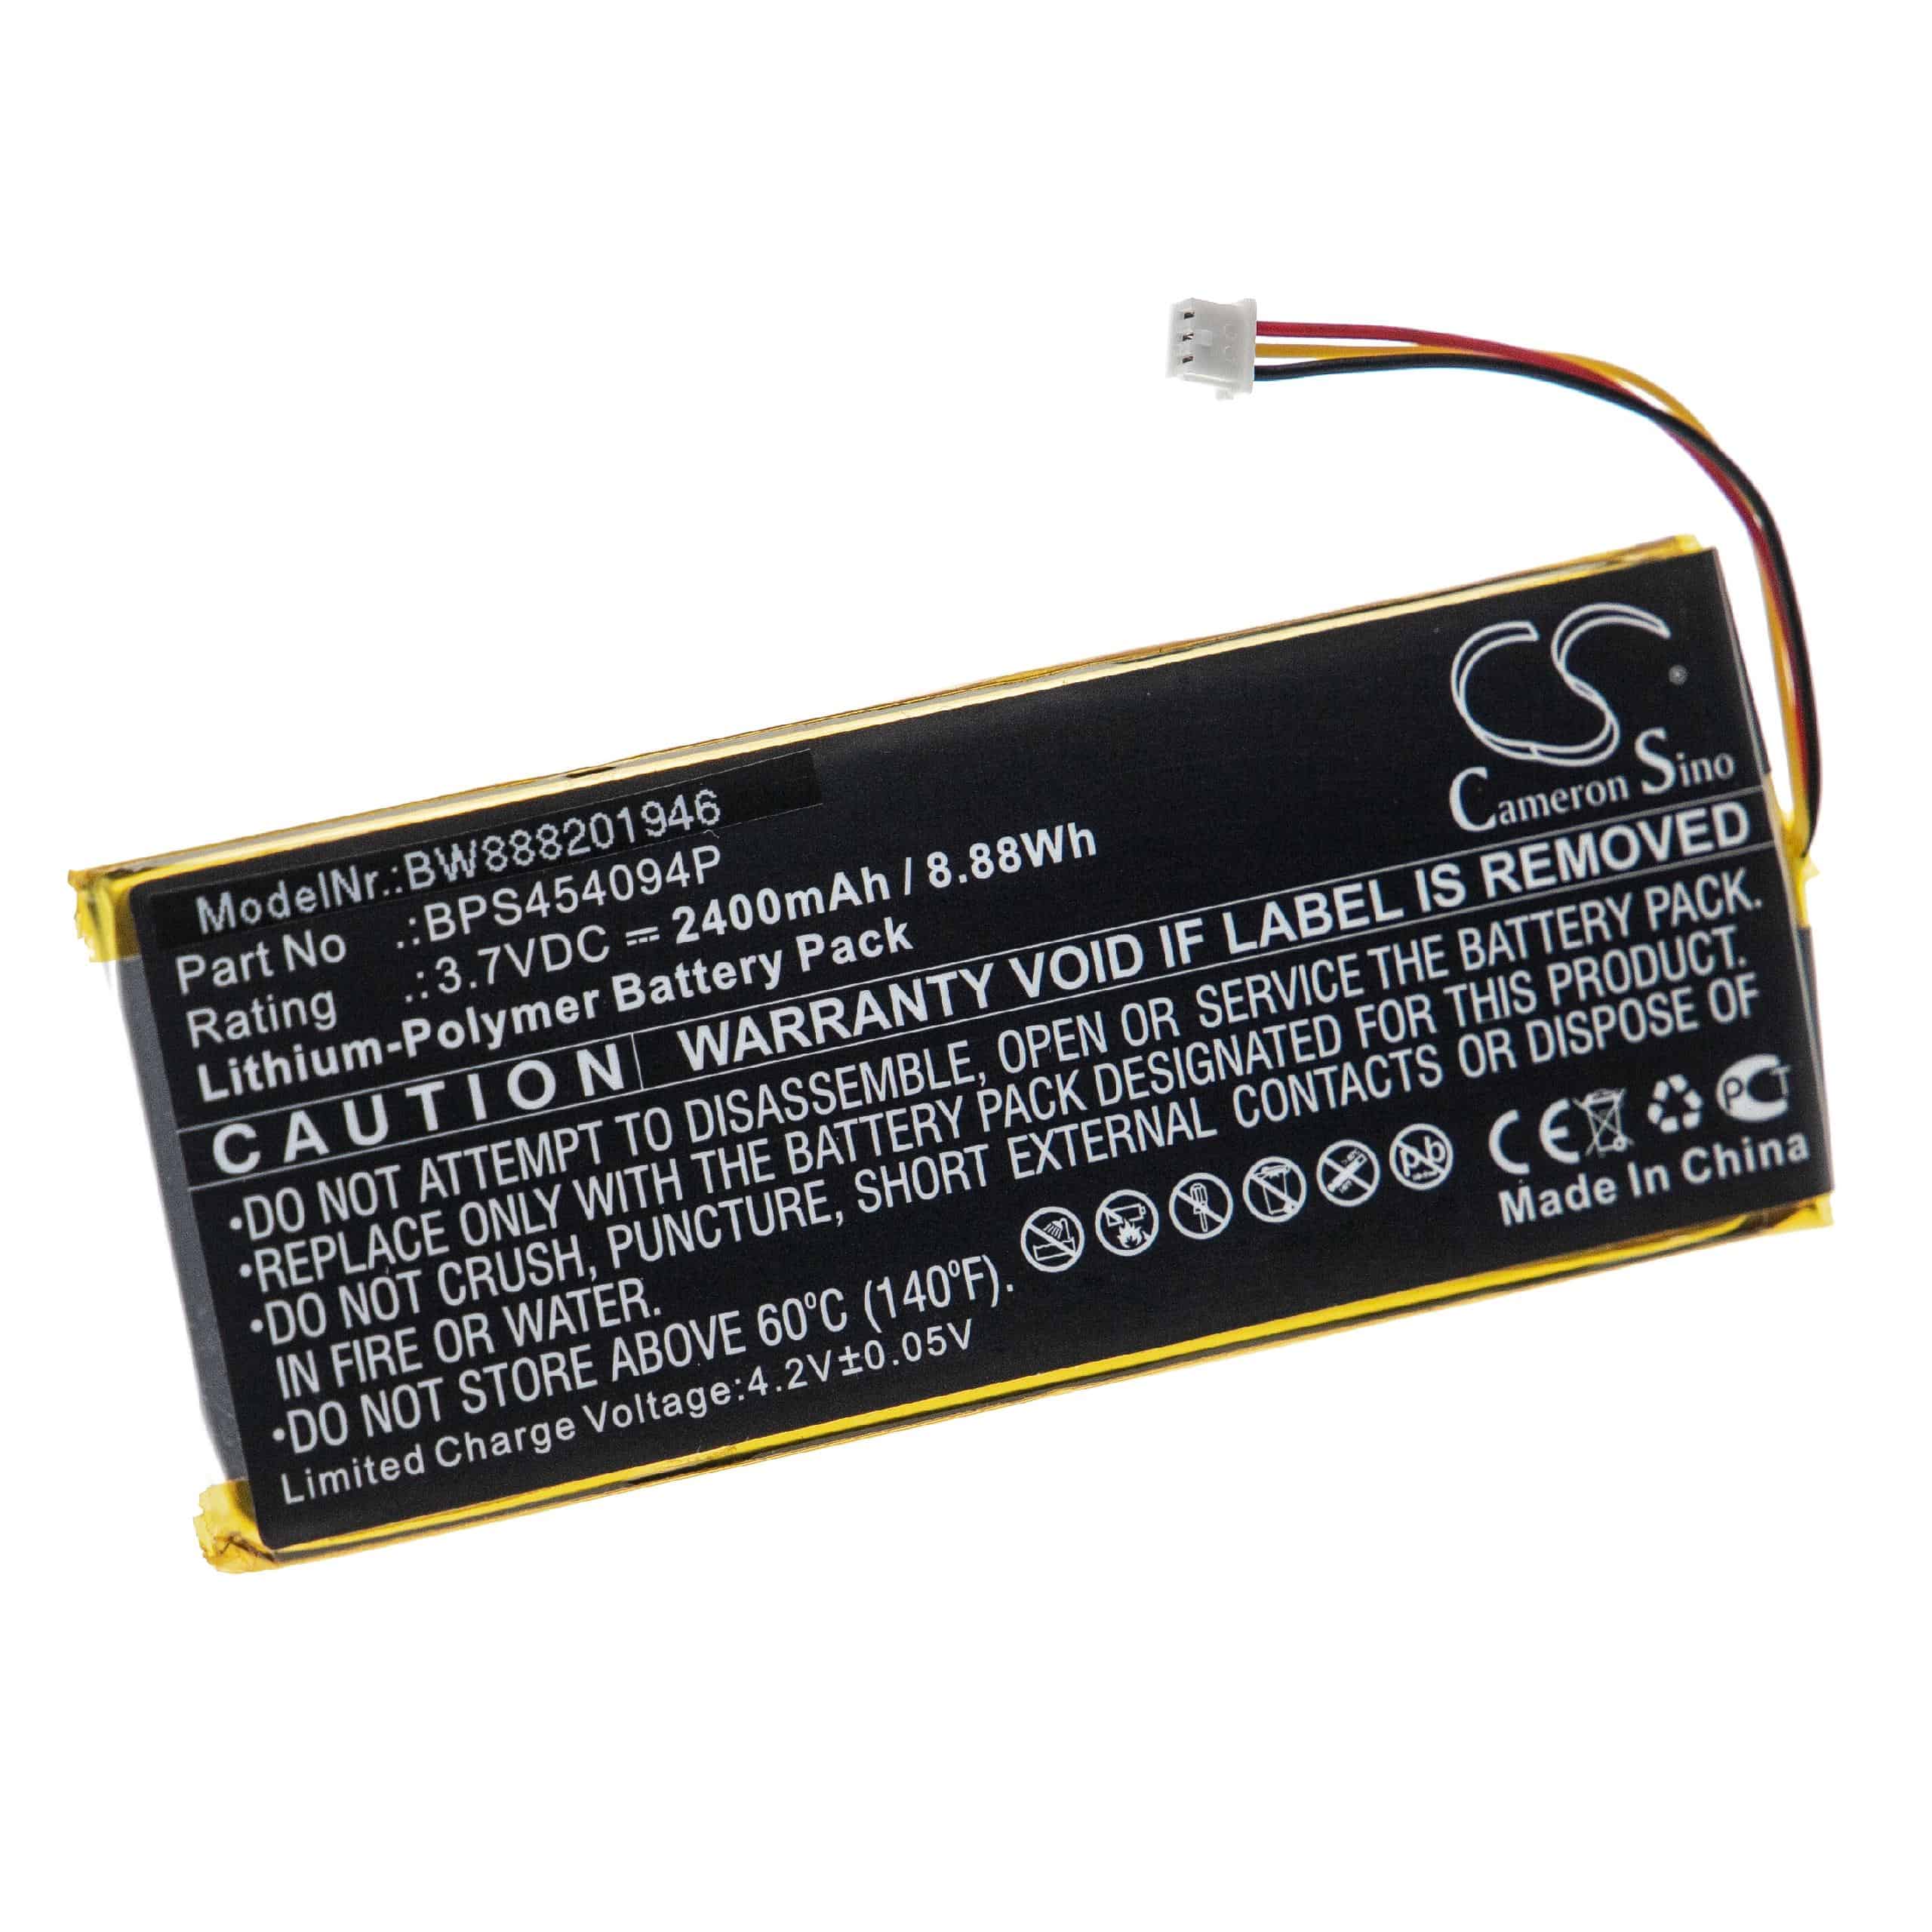 Batterie remplace Geneva BPS454094P pour radio - 2400mAh 3,7V Li-polymère